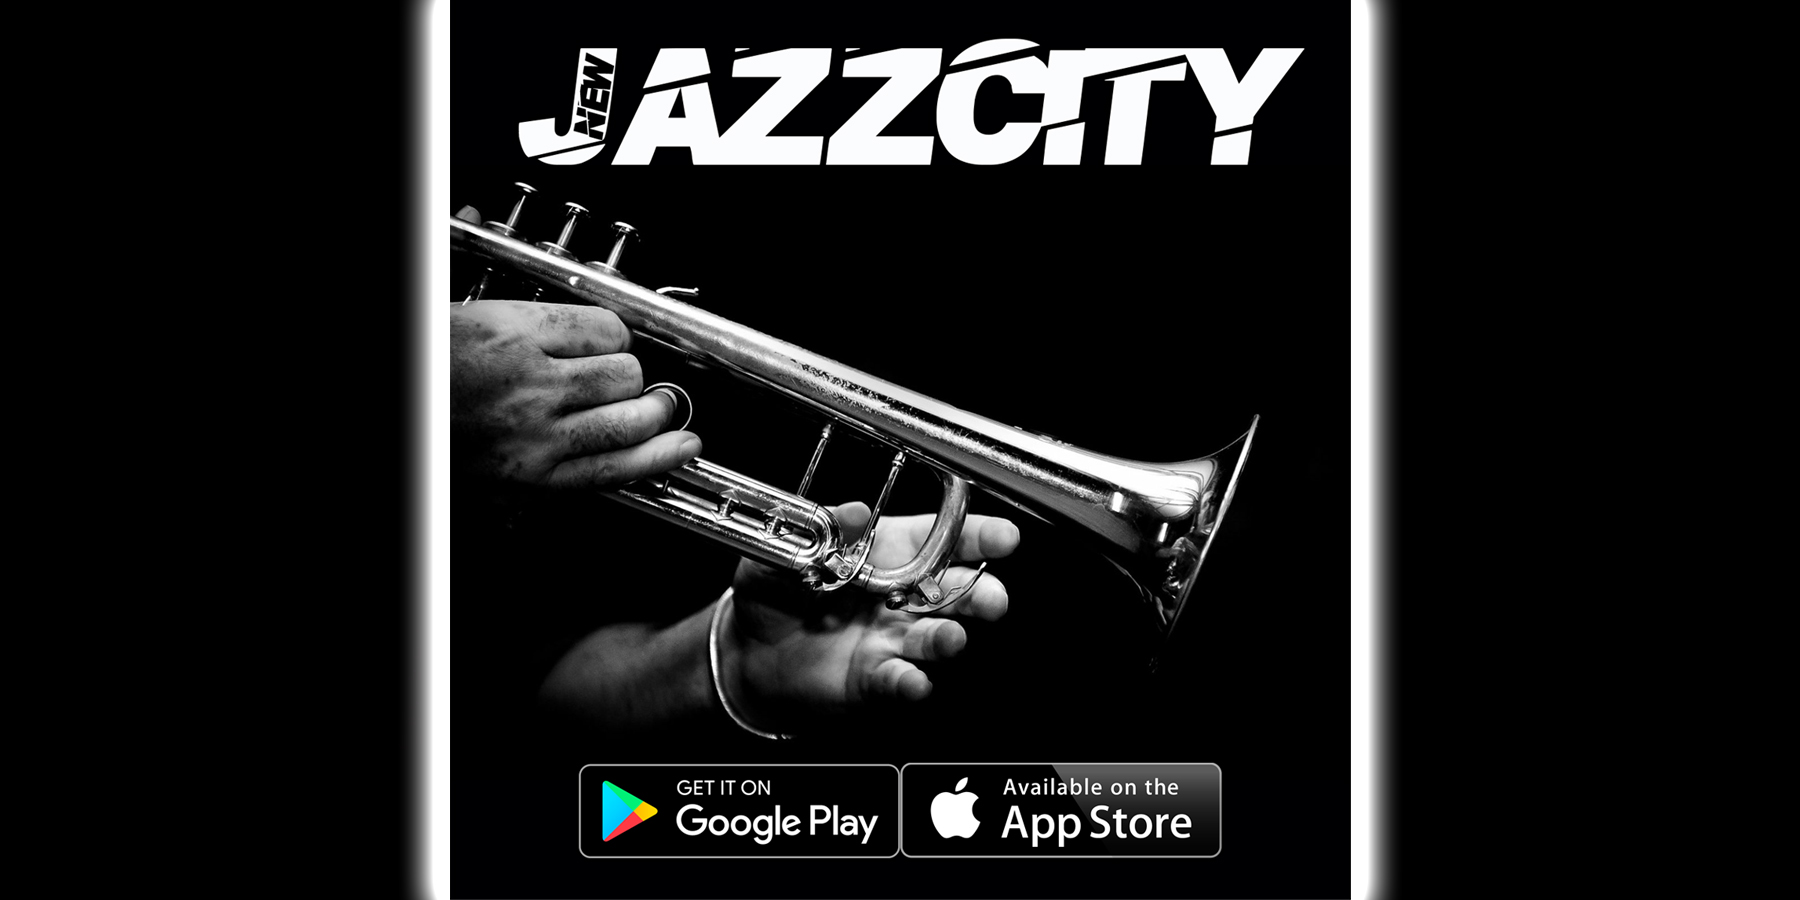 The New Jazz City Mobile App